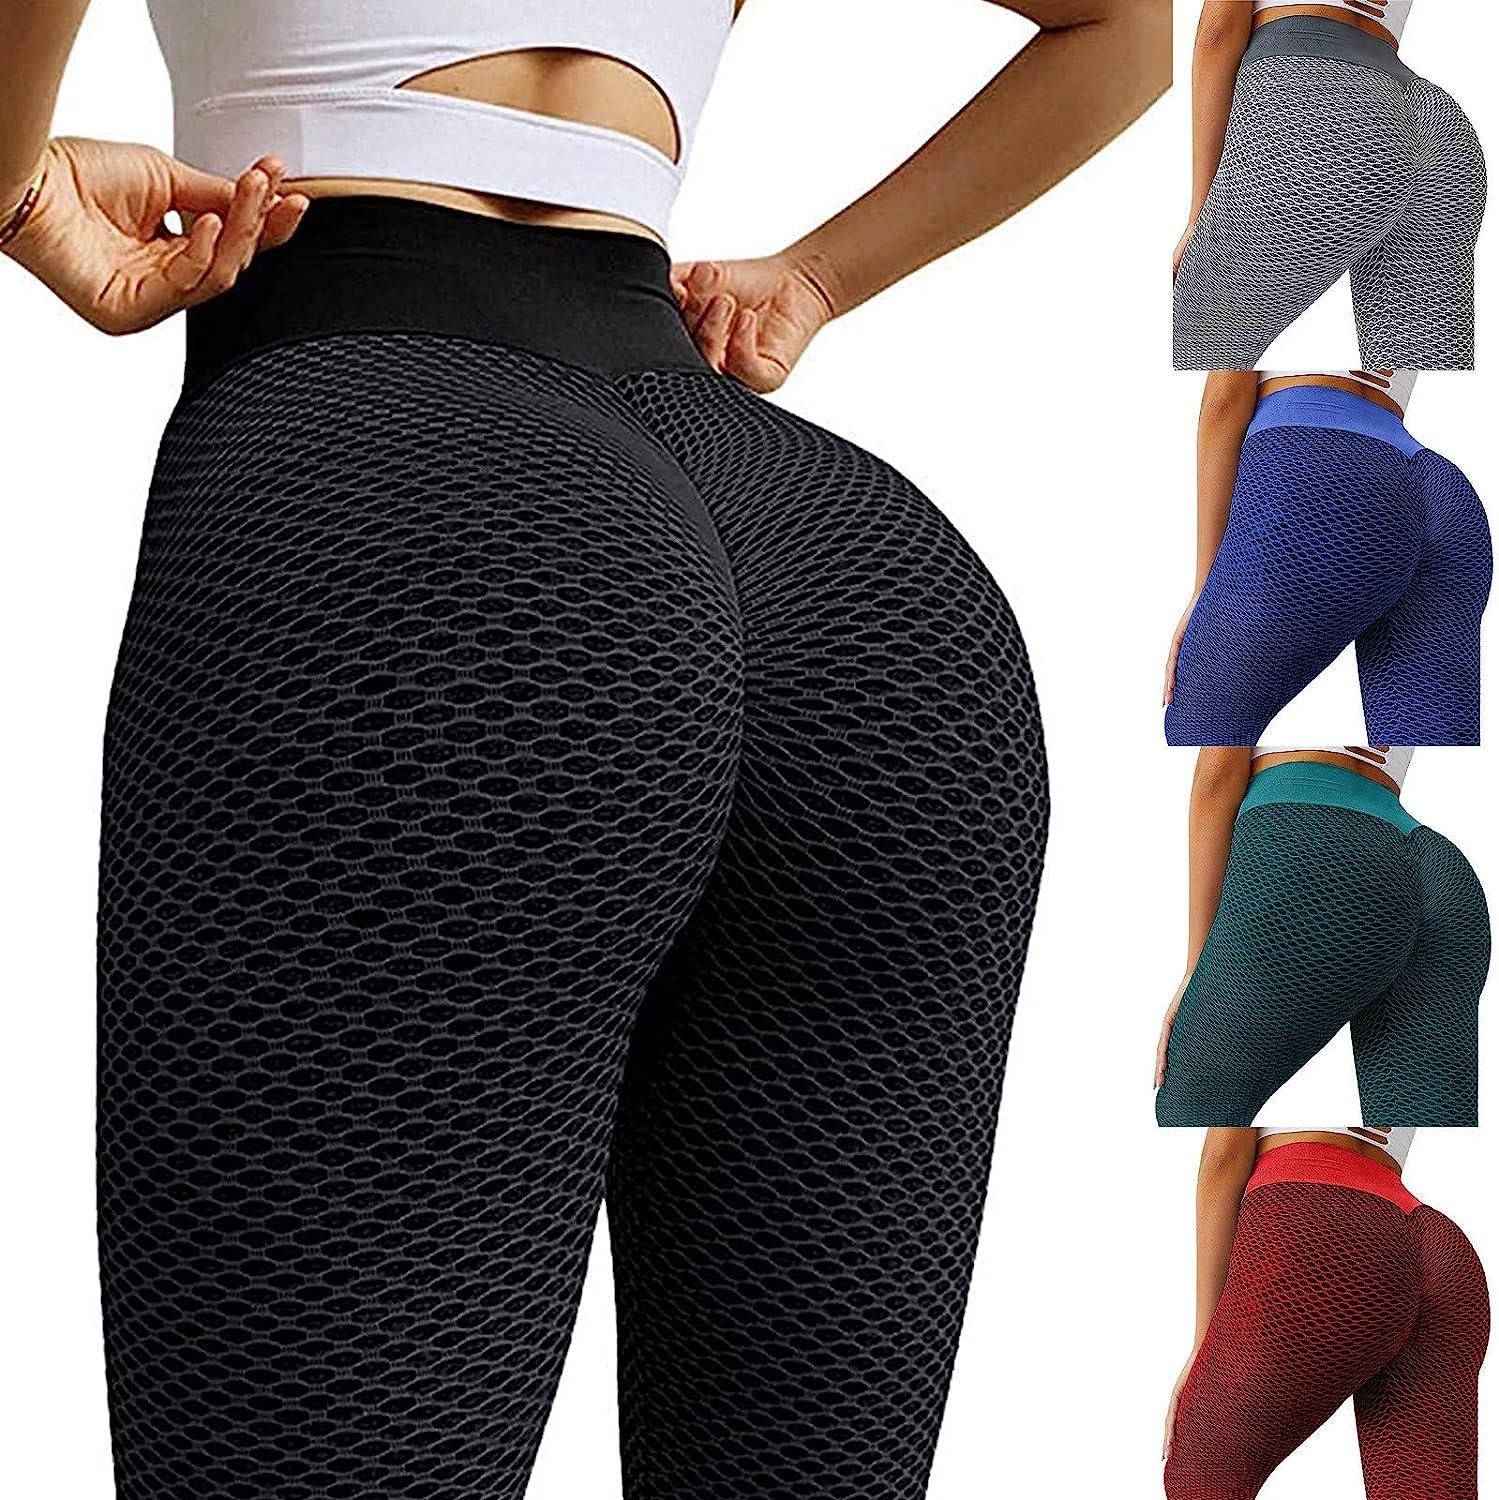 YRAETENM Sexy Yoga Pants for Women Butt Lifting Anti Cellulite Workout  Leggings High Waist Tights Running Gym Sweatpants X-Large 02 Black